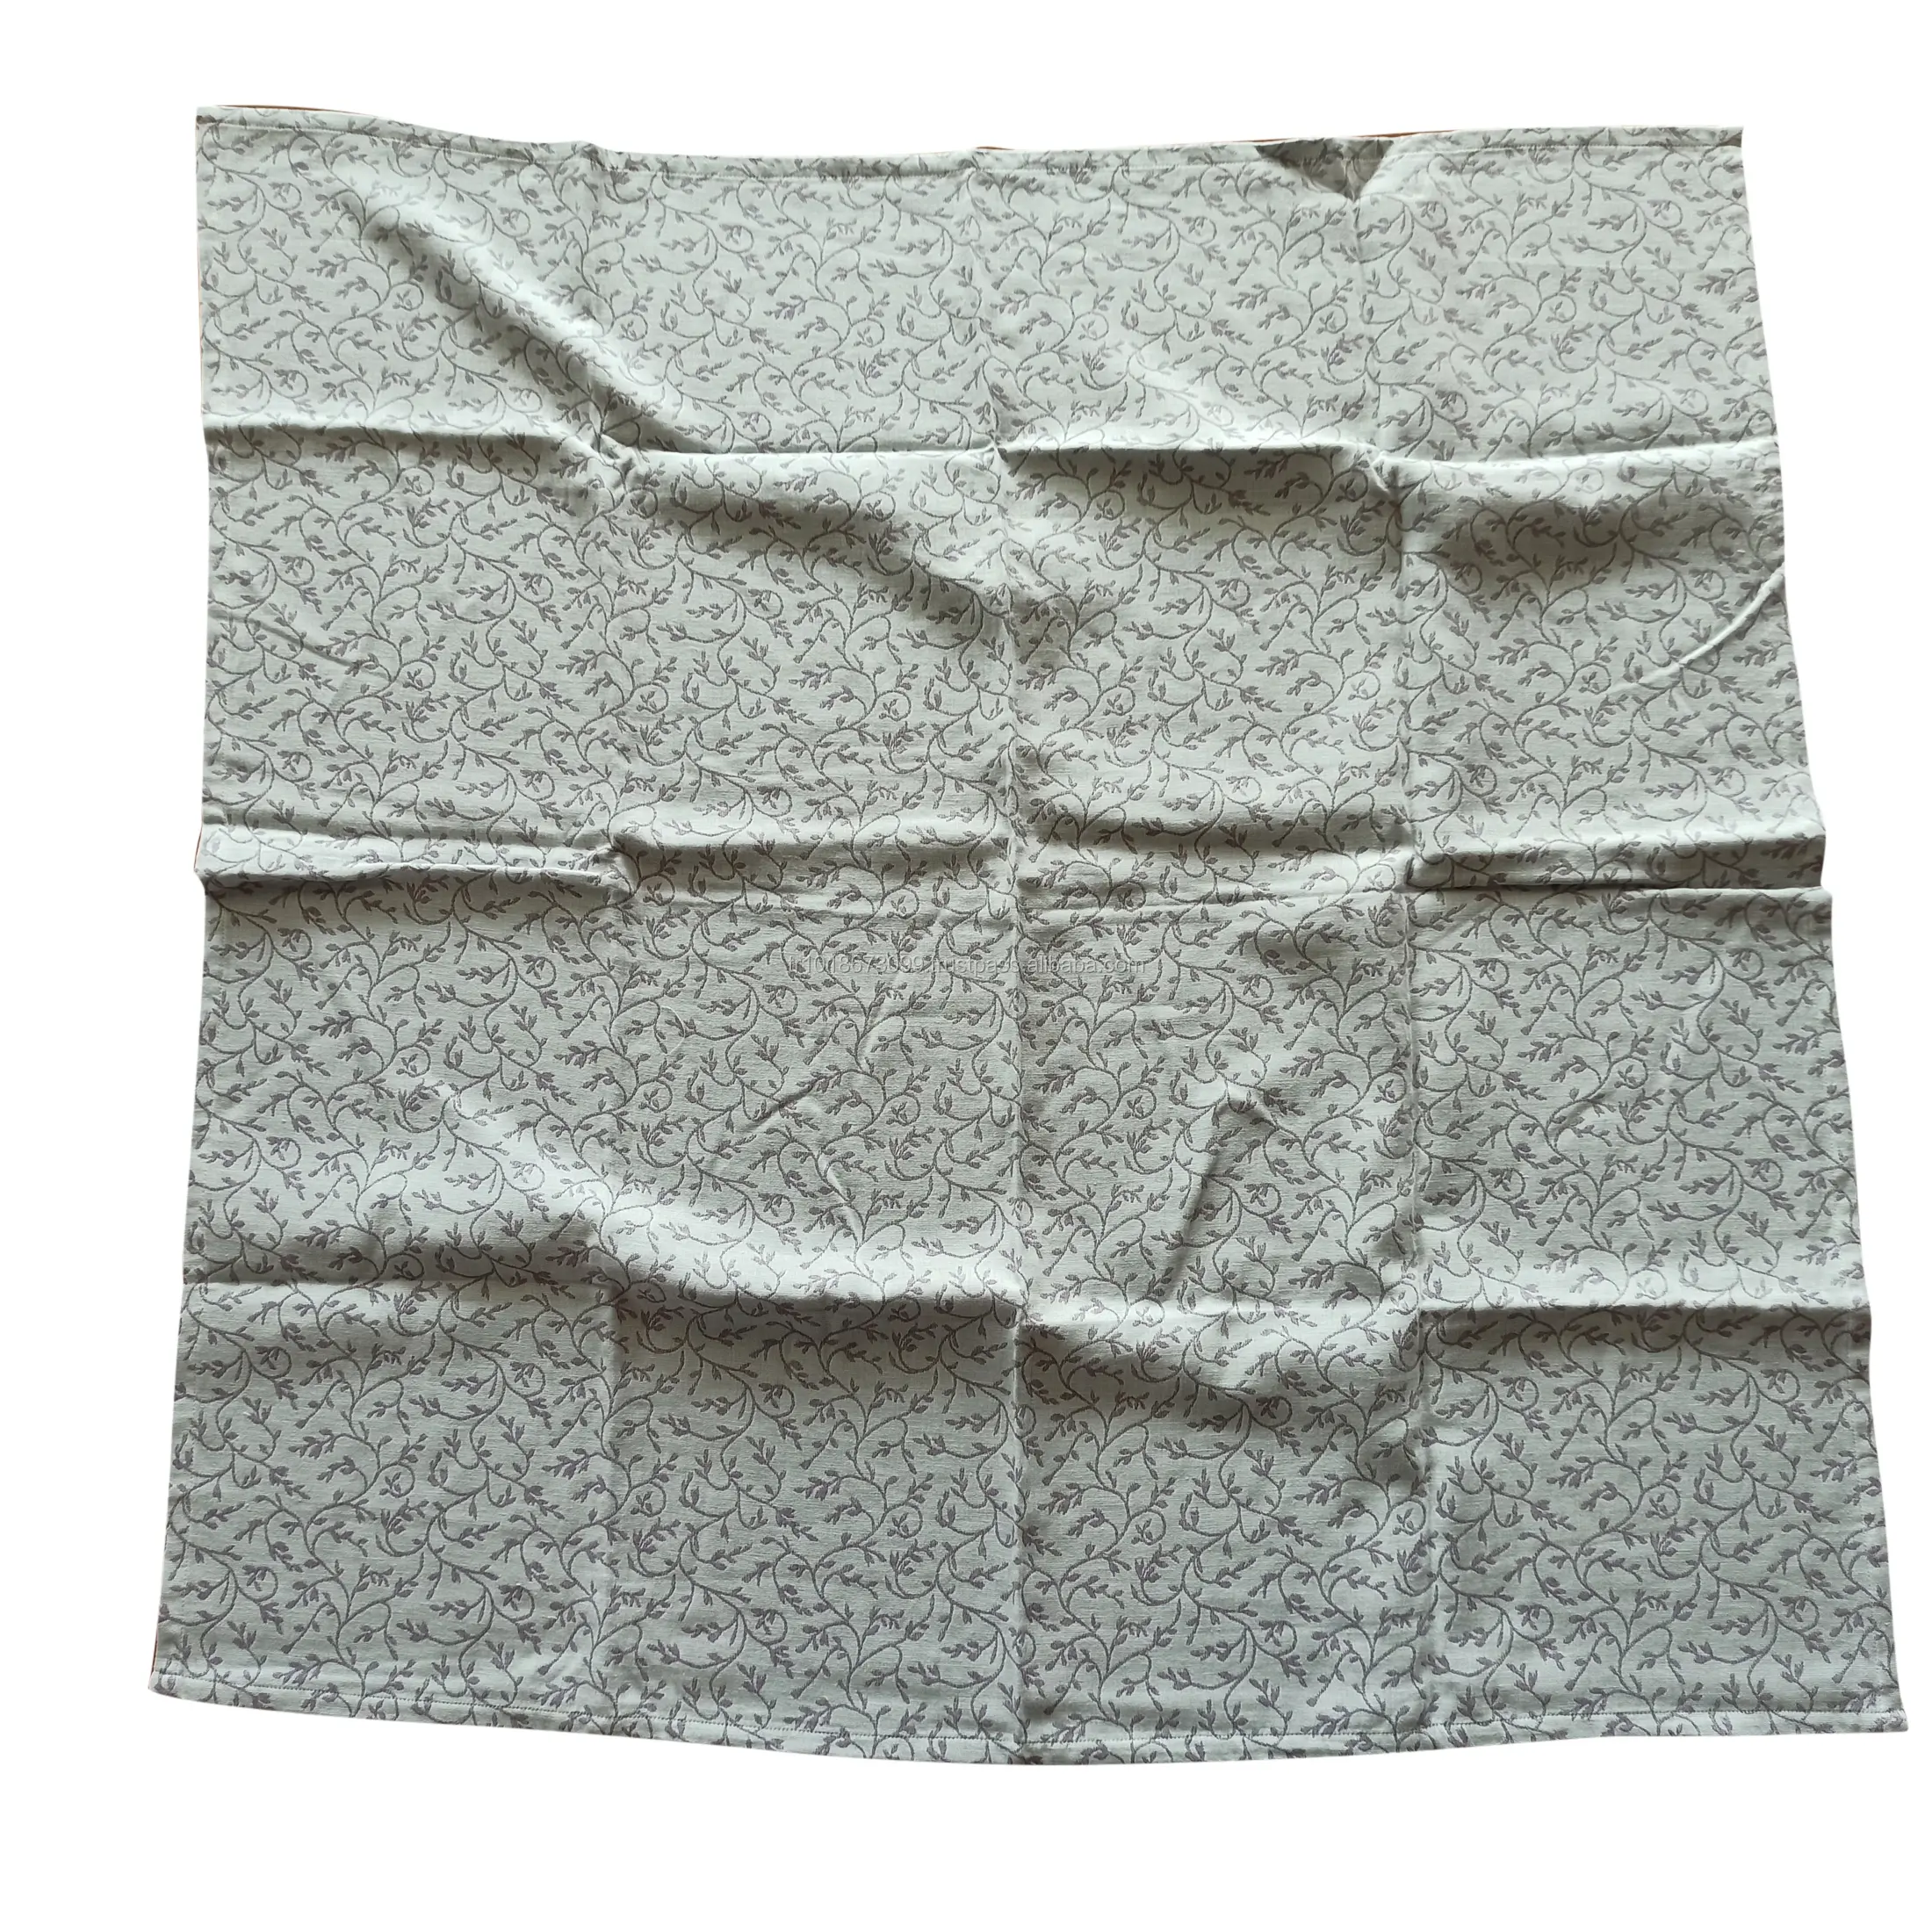 Muslin Cotton Infant Blanket Babyサイズ100 × 100センチメートル-40 × 40インチFactoryからBest Quality高級Pure Cotton Wholesale